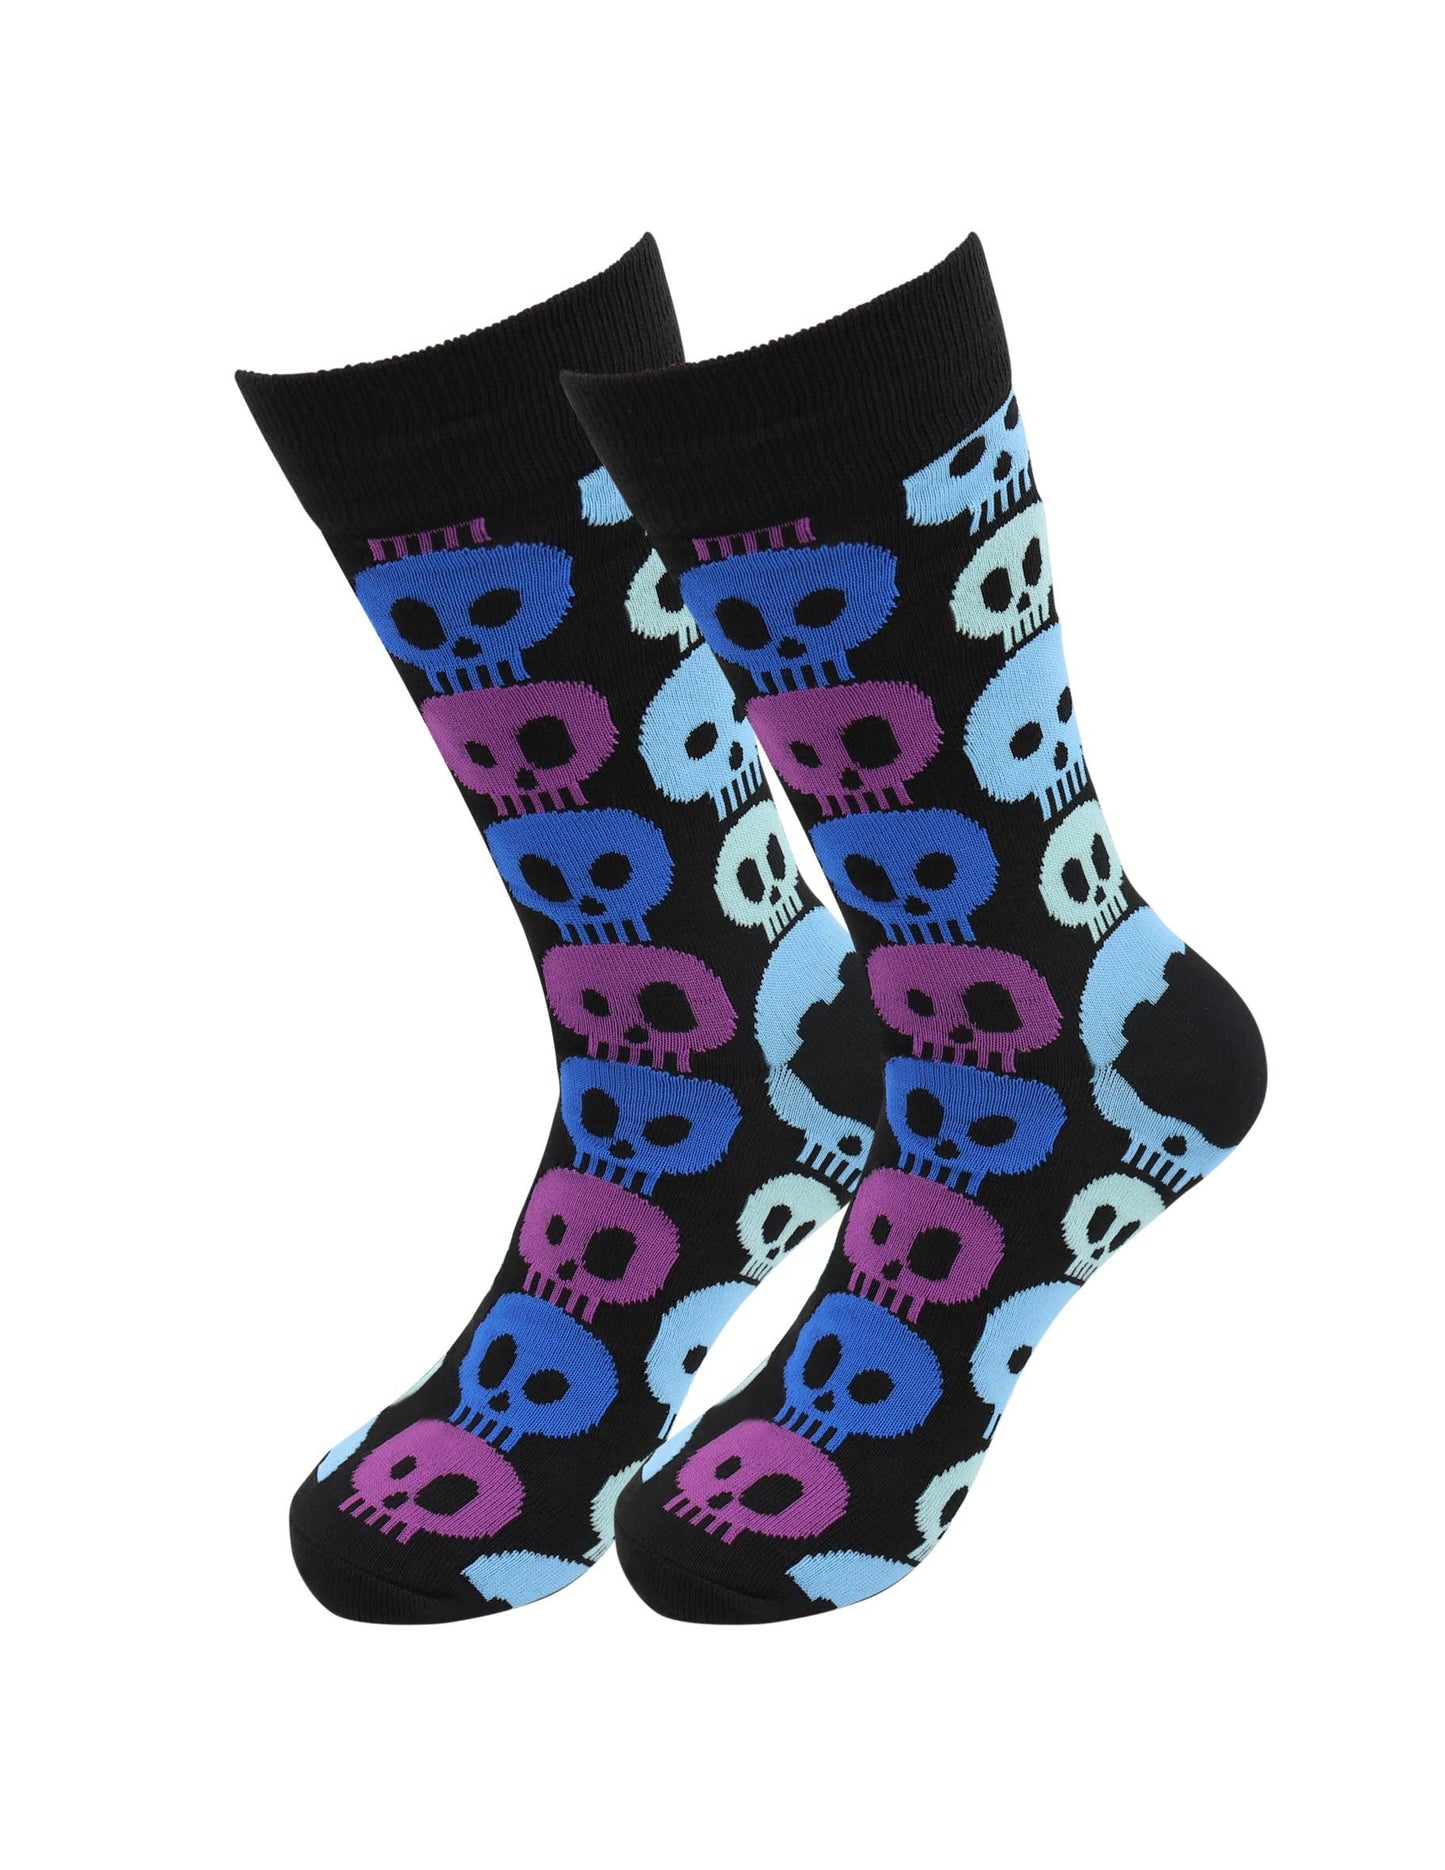 Image of Real Sic Skull Horror Socks - Skull, Alien , Cotton Crew Happy Socks